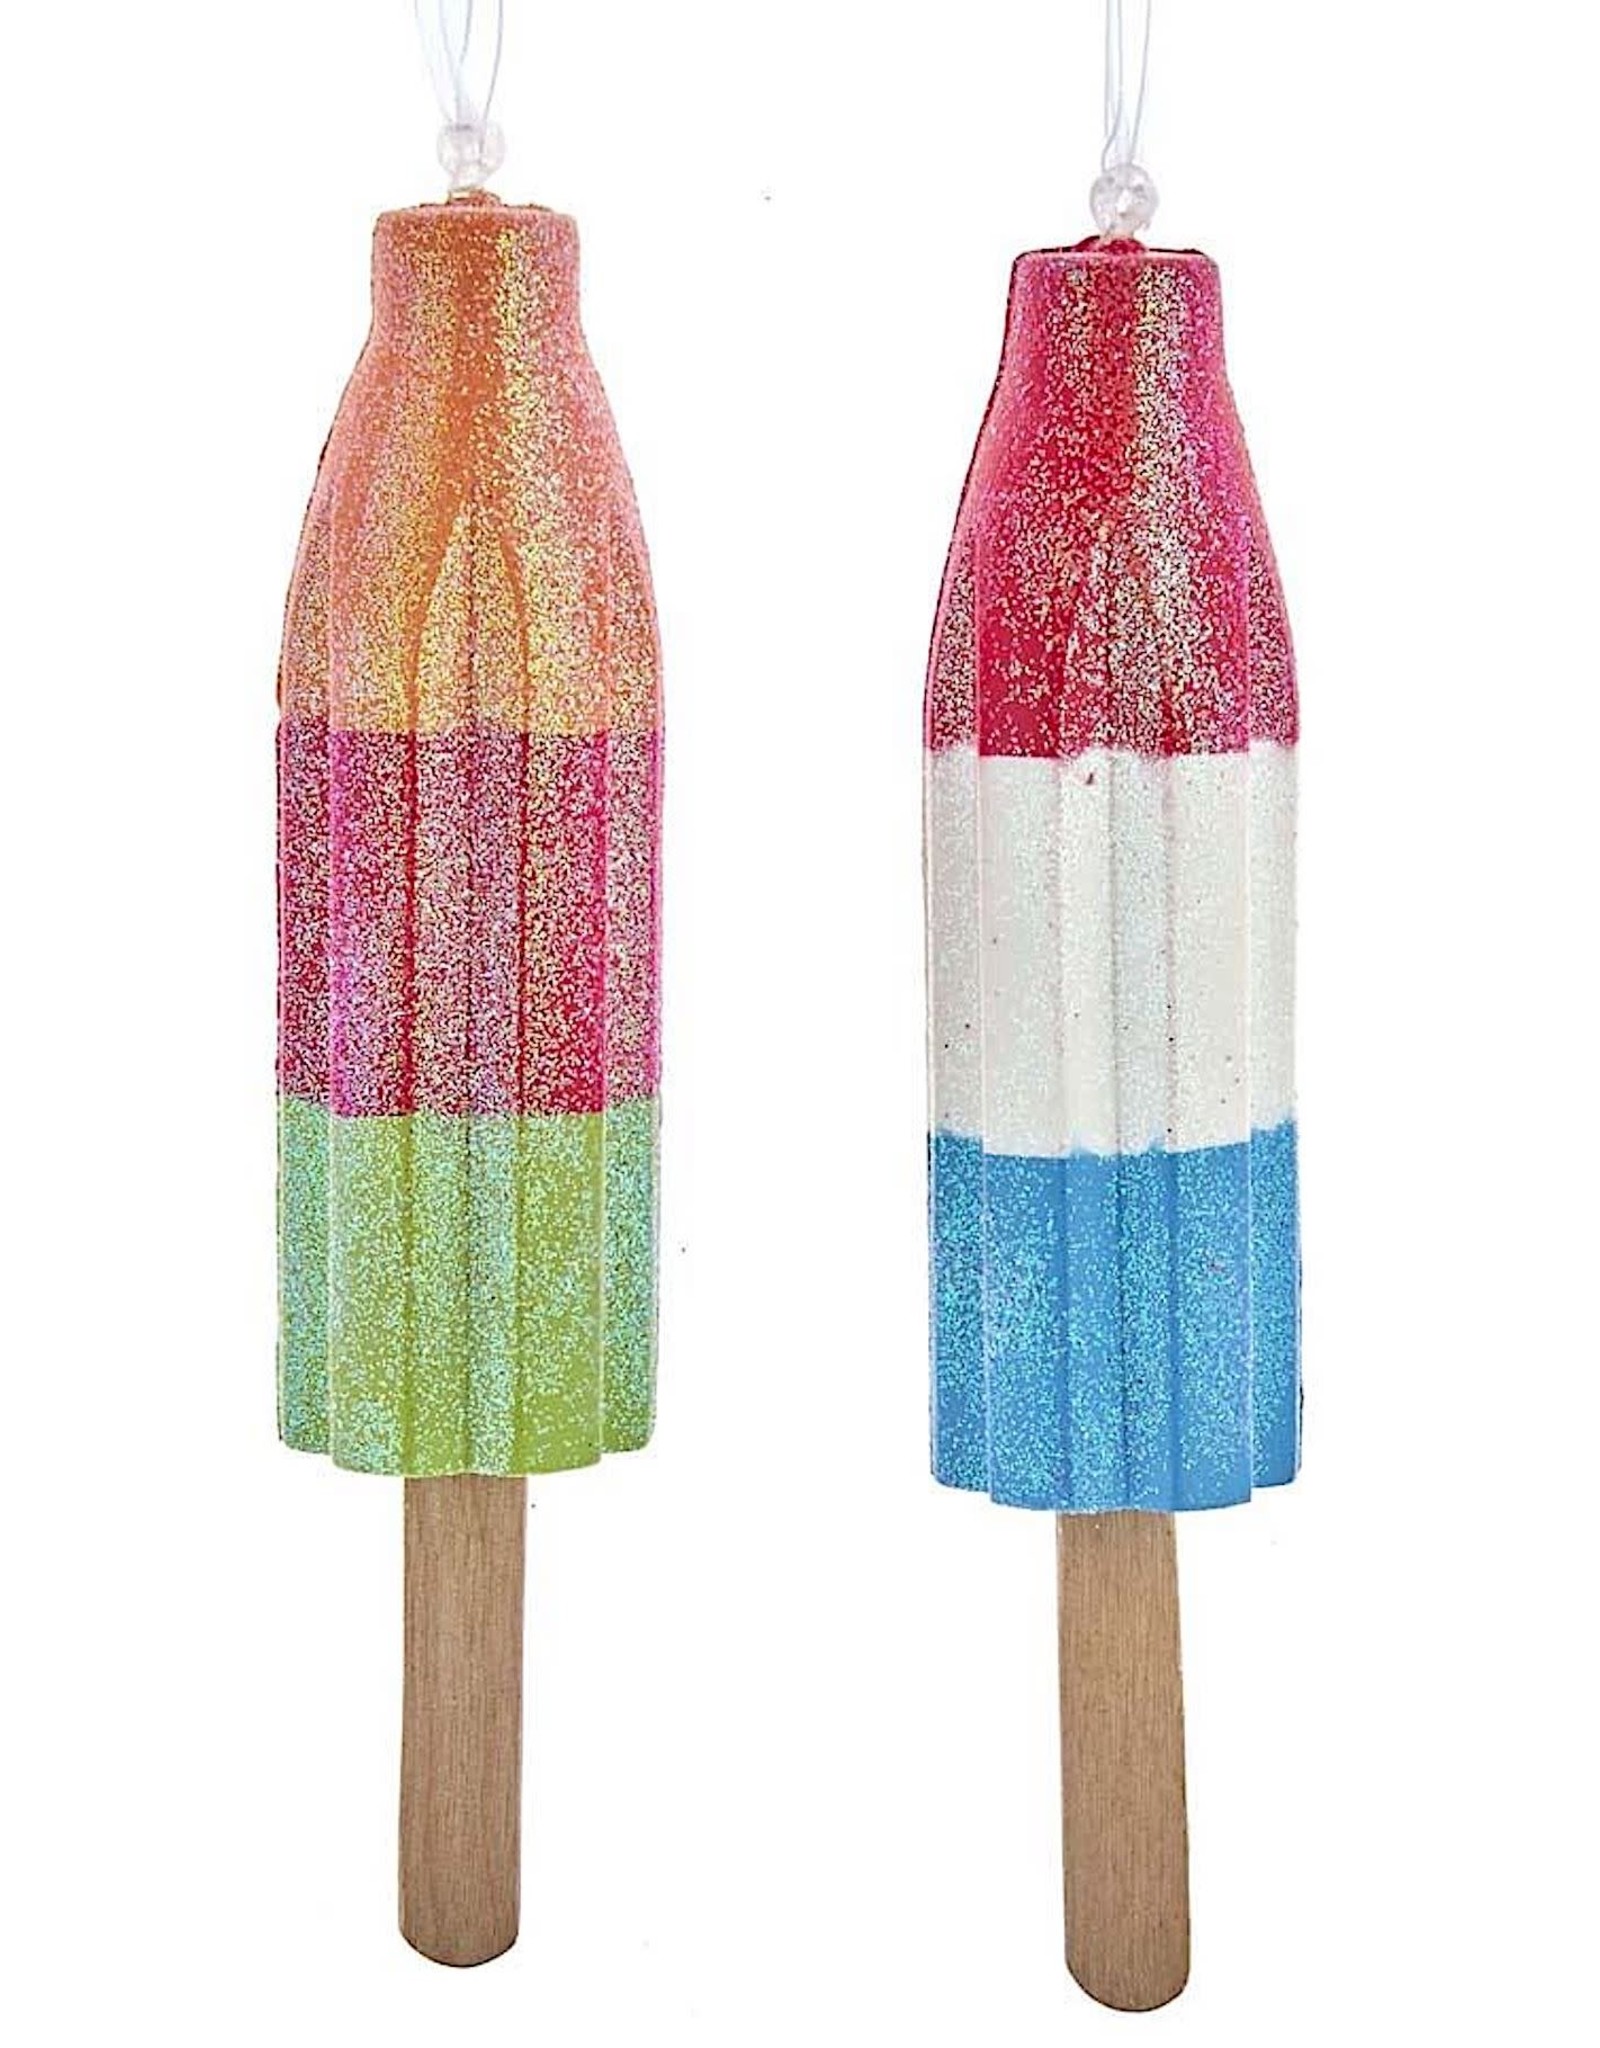 Kurt Adler Ice Rocket Pop Popsicle Ornaments 2 Assorted